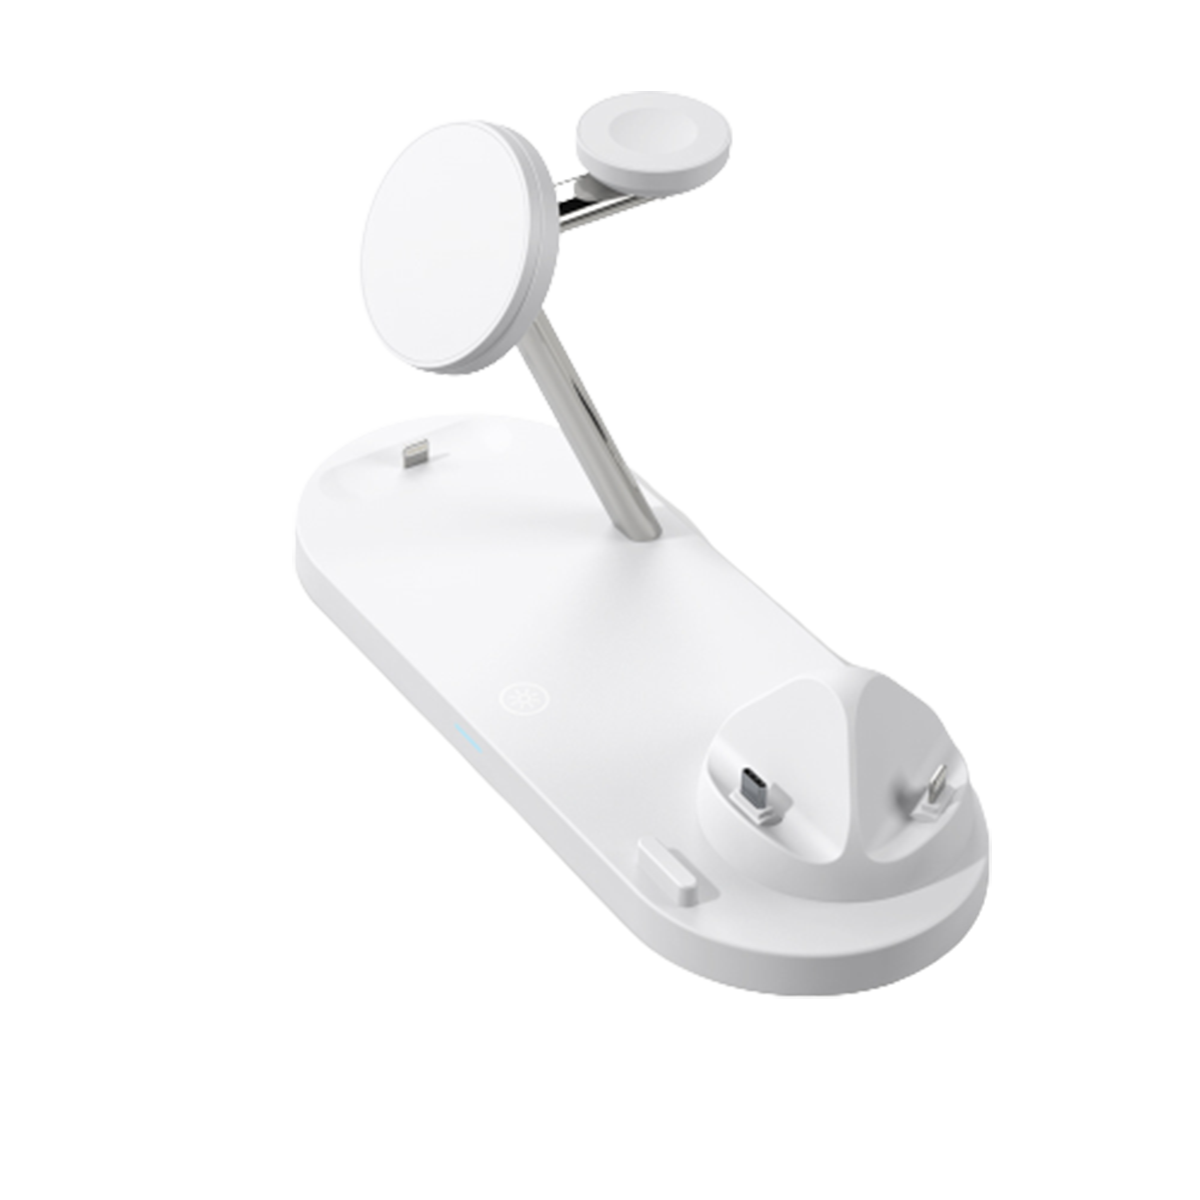 SYNTEK Drahtloses Ladegerät in 1 für Ladegerät Schwarz Kopfhörerhalter Multifunktion Uhr xiaomi, Apple Ladegerät Handy 3 drahtloses